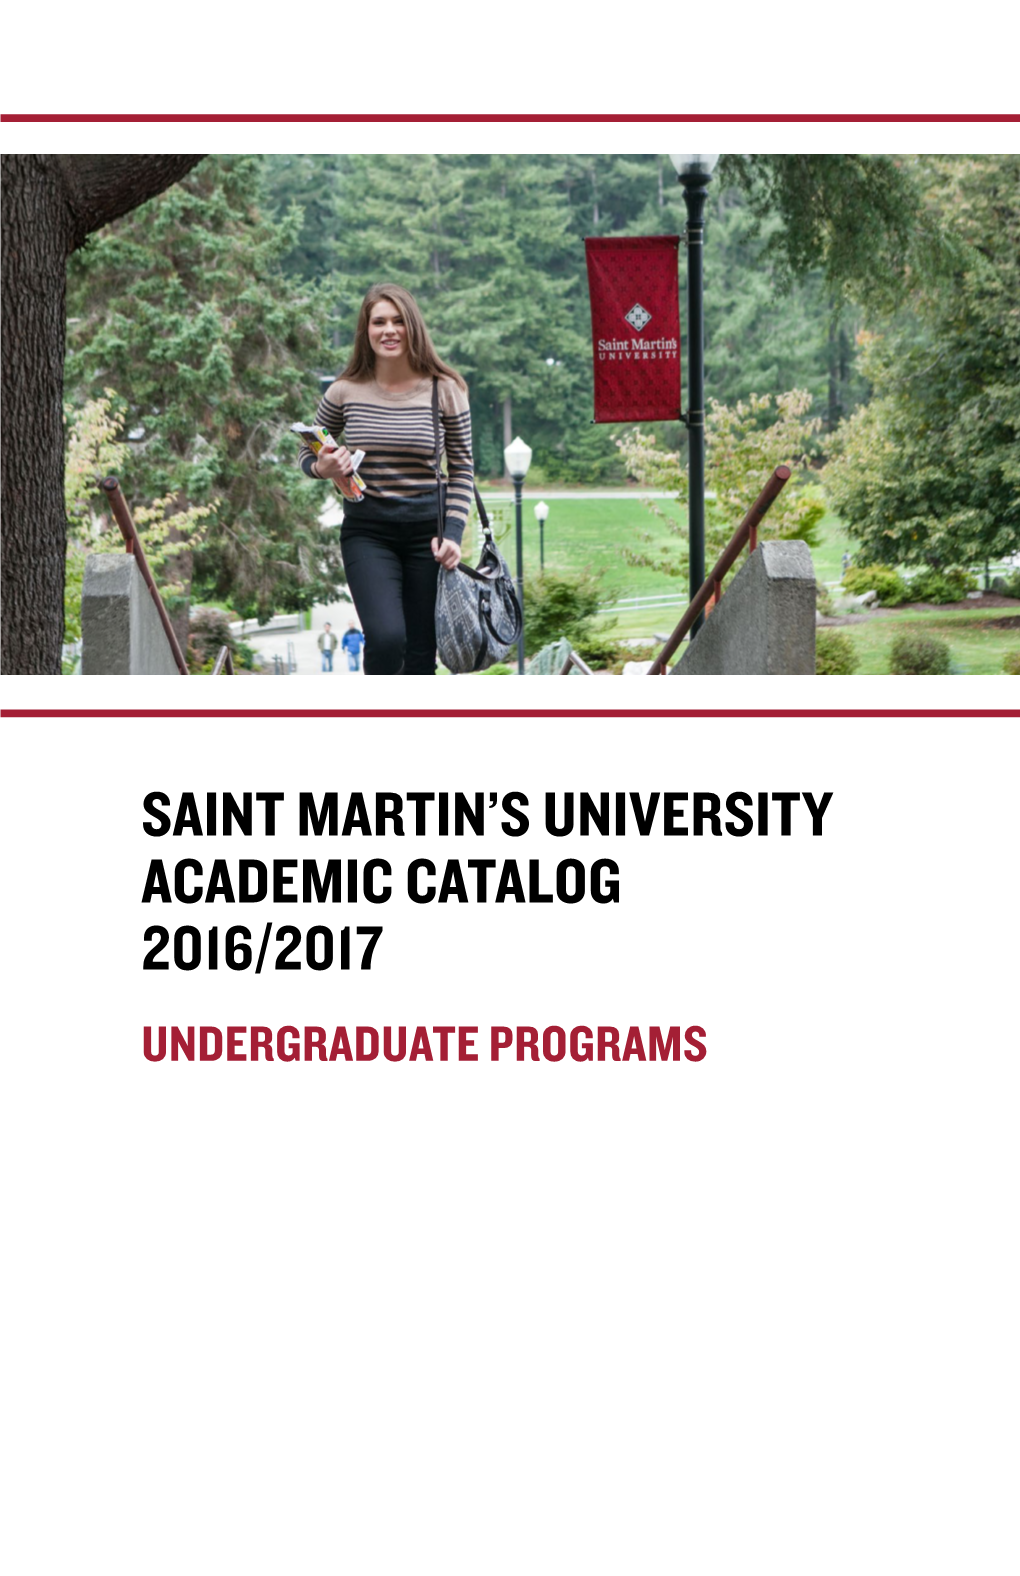 Saint Martin's University Academic Catalog 2016/2017